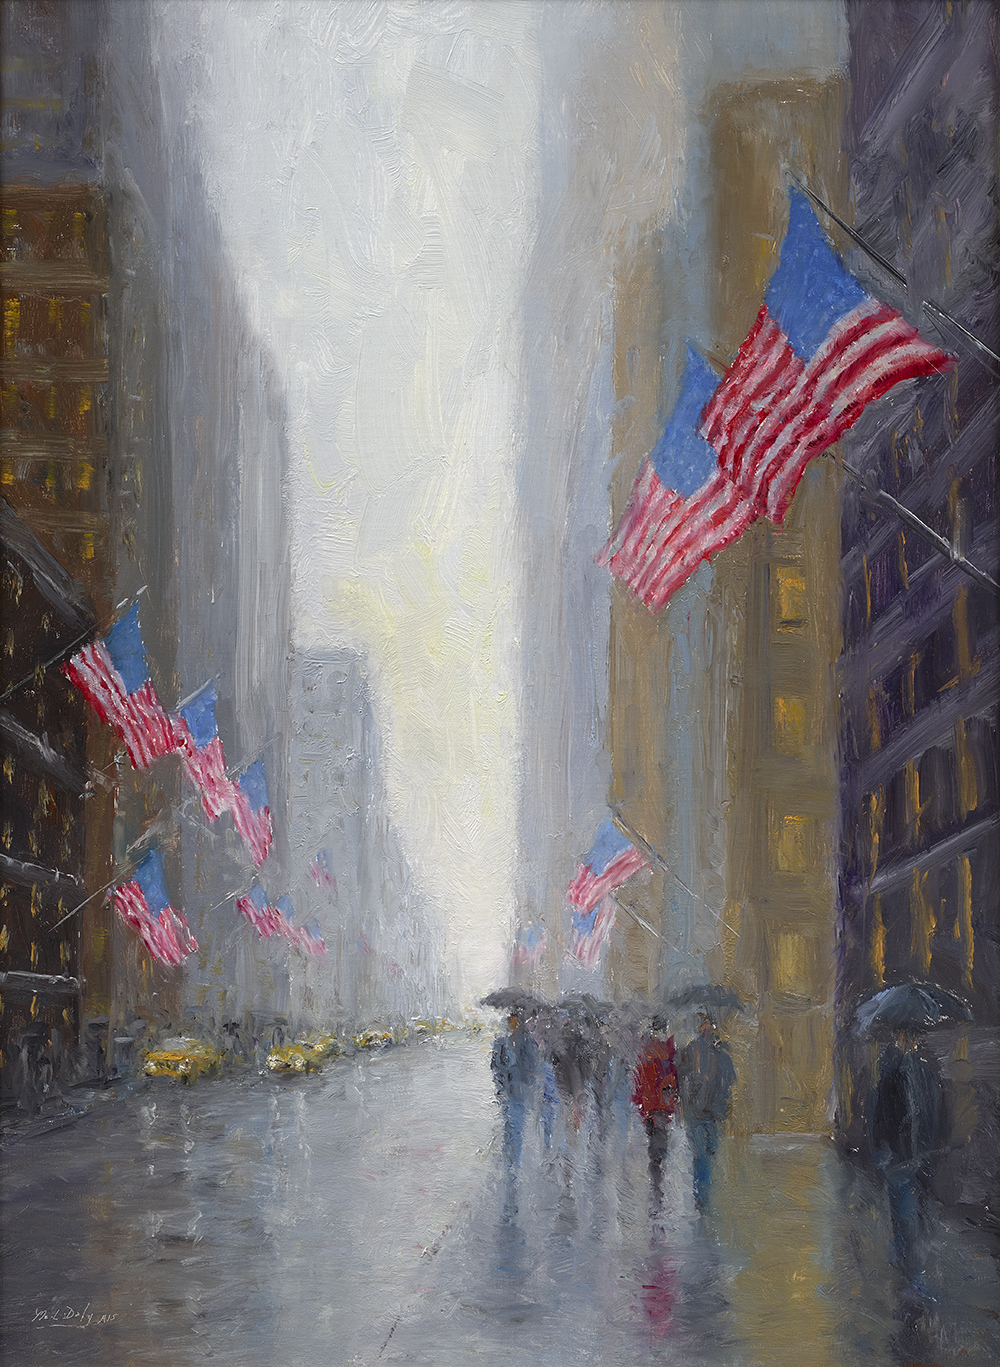 mark_daly_md1059_rainy_day_flags_new_york_city.jpg